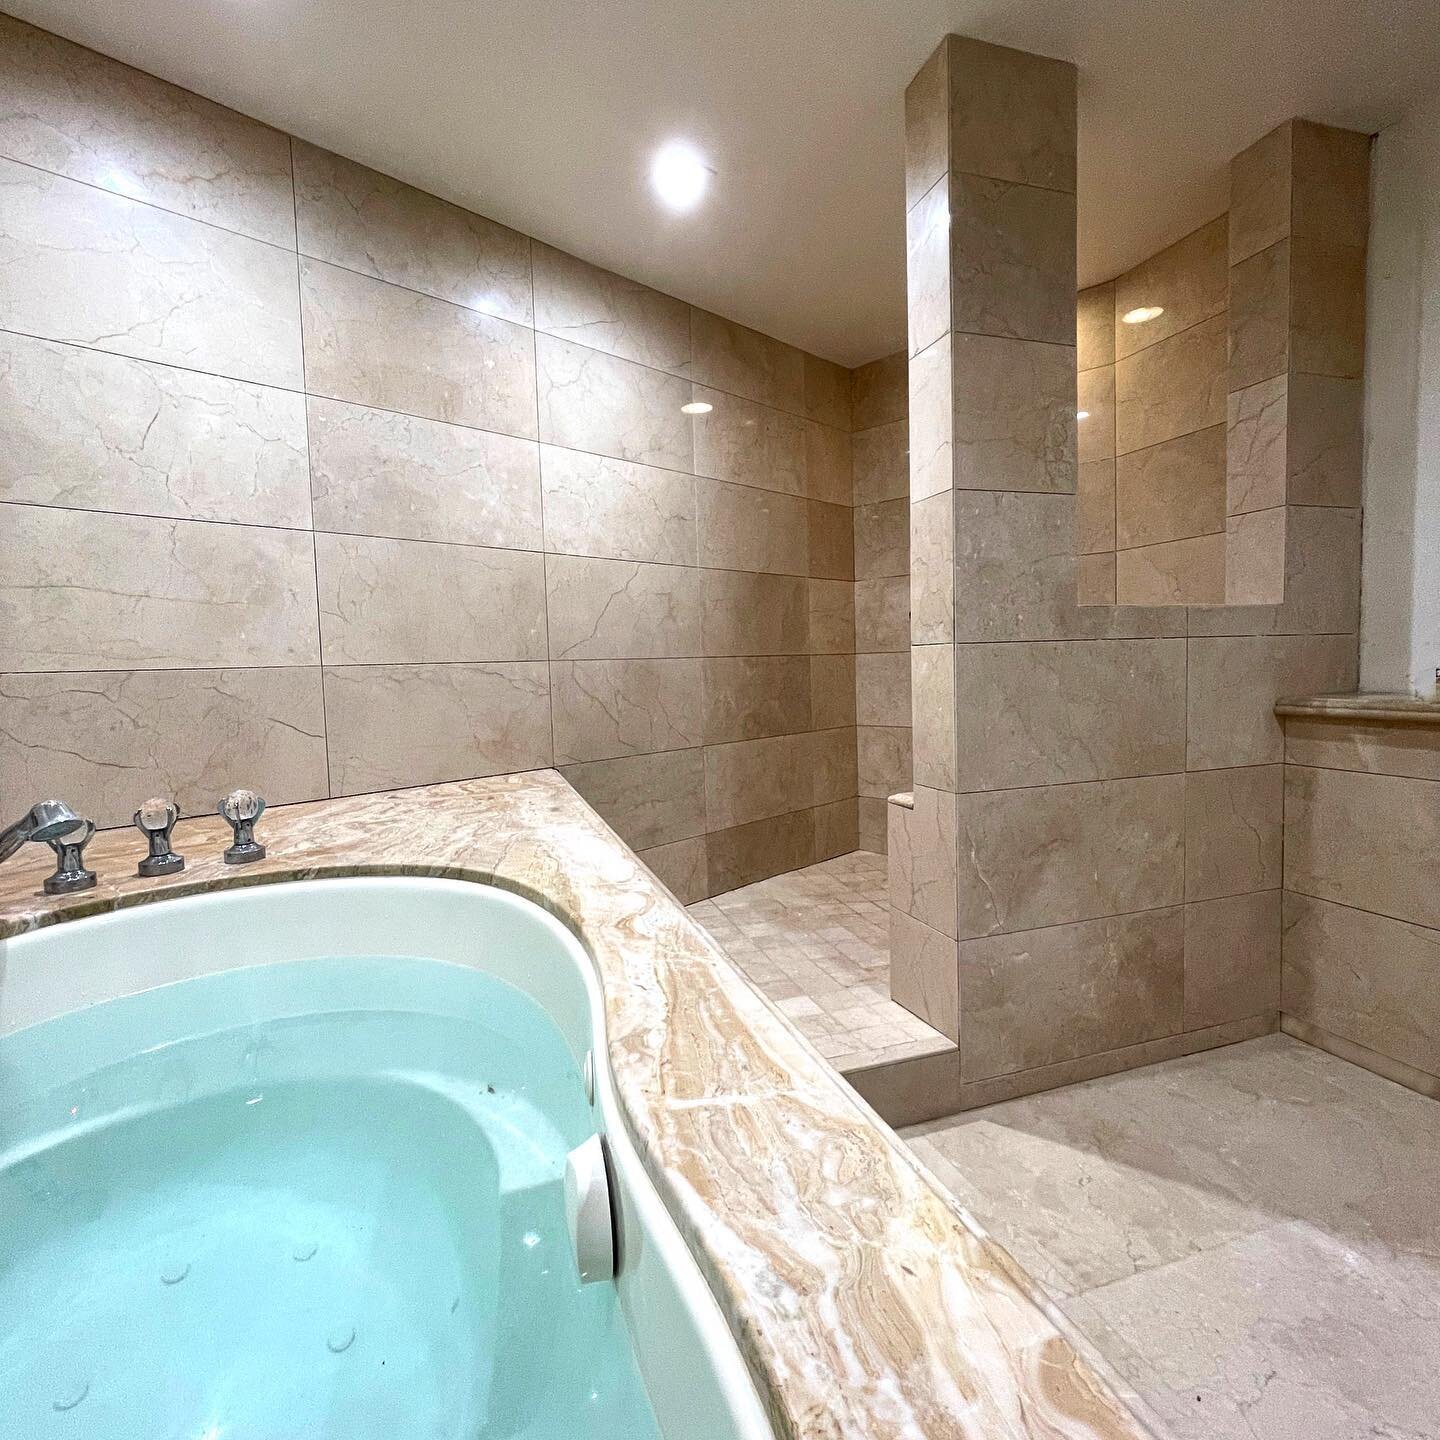 Crema Marfil marble for this en-suite bathroom 👌🏻 #tile #tiling #tiledesign #tilerspride #contractorsofinsta #design #construction #contractor #flooring #remodel #tiletool #powertools #protools #designer #bluecollar #bathroomdesign #tilingwork #til